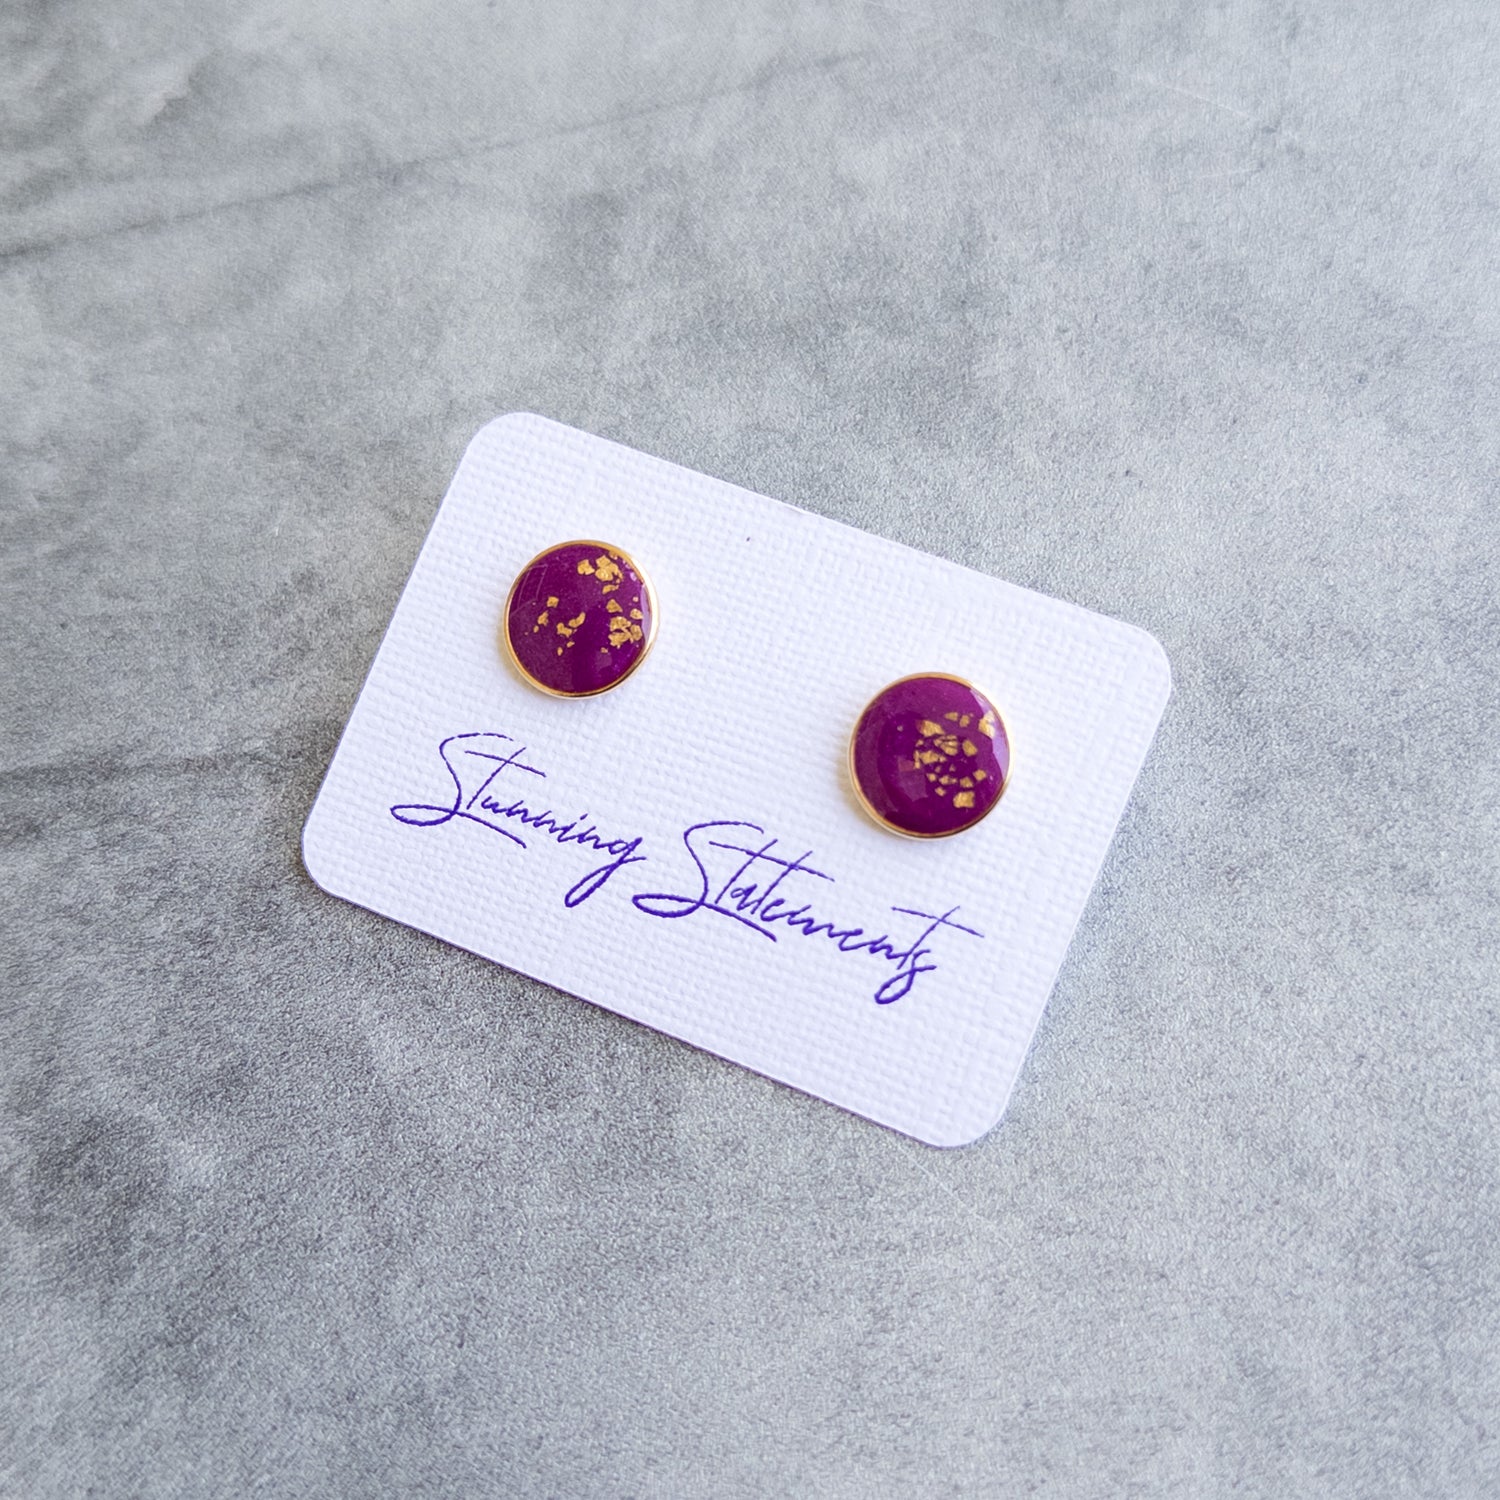 stunning statements office work professional simple circle clay purple juliette stud earrings